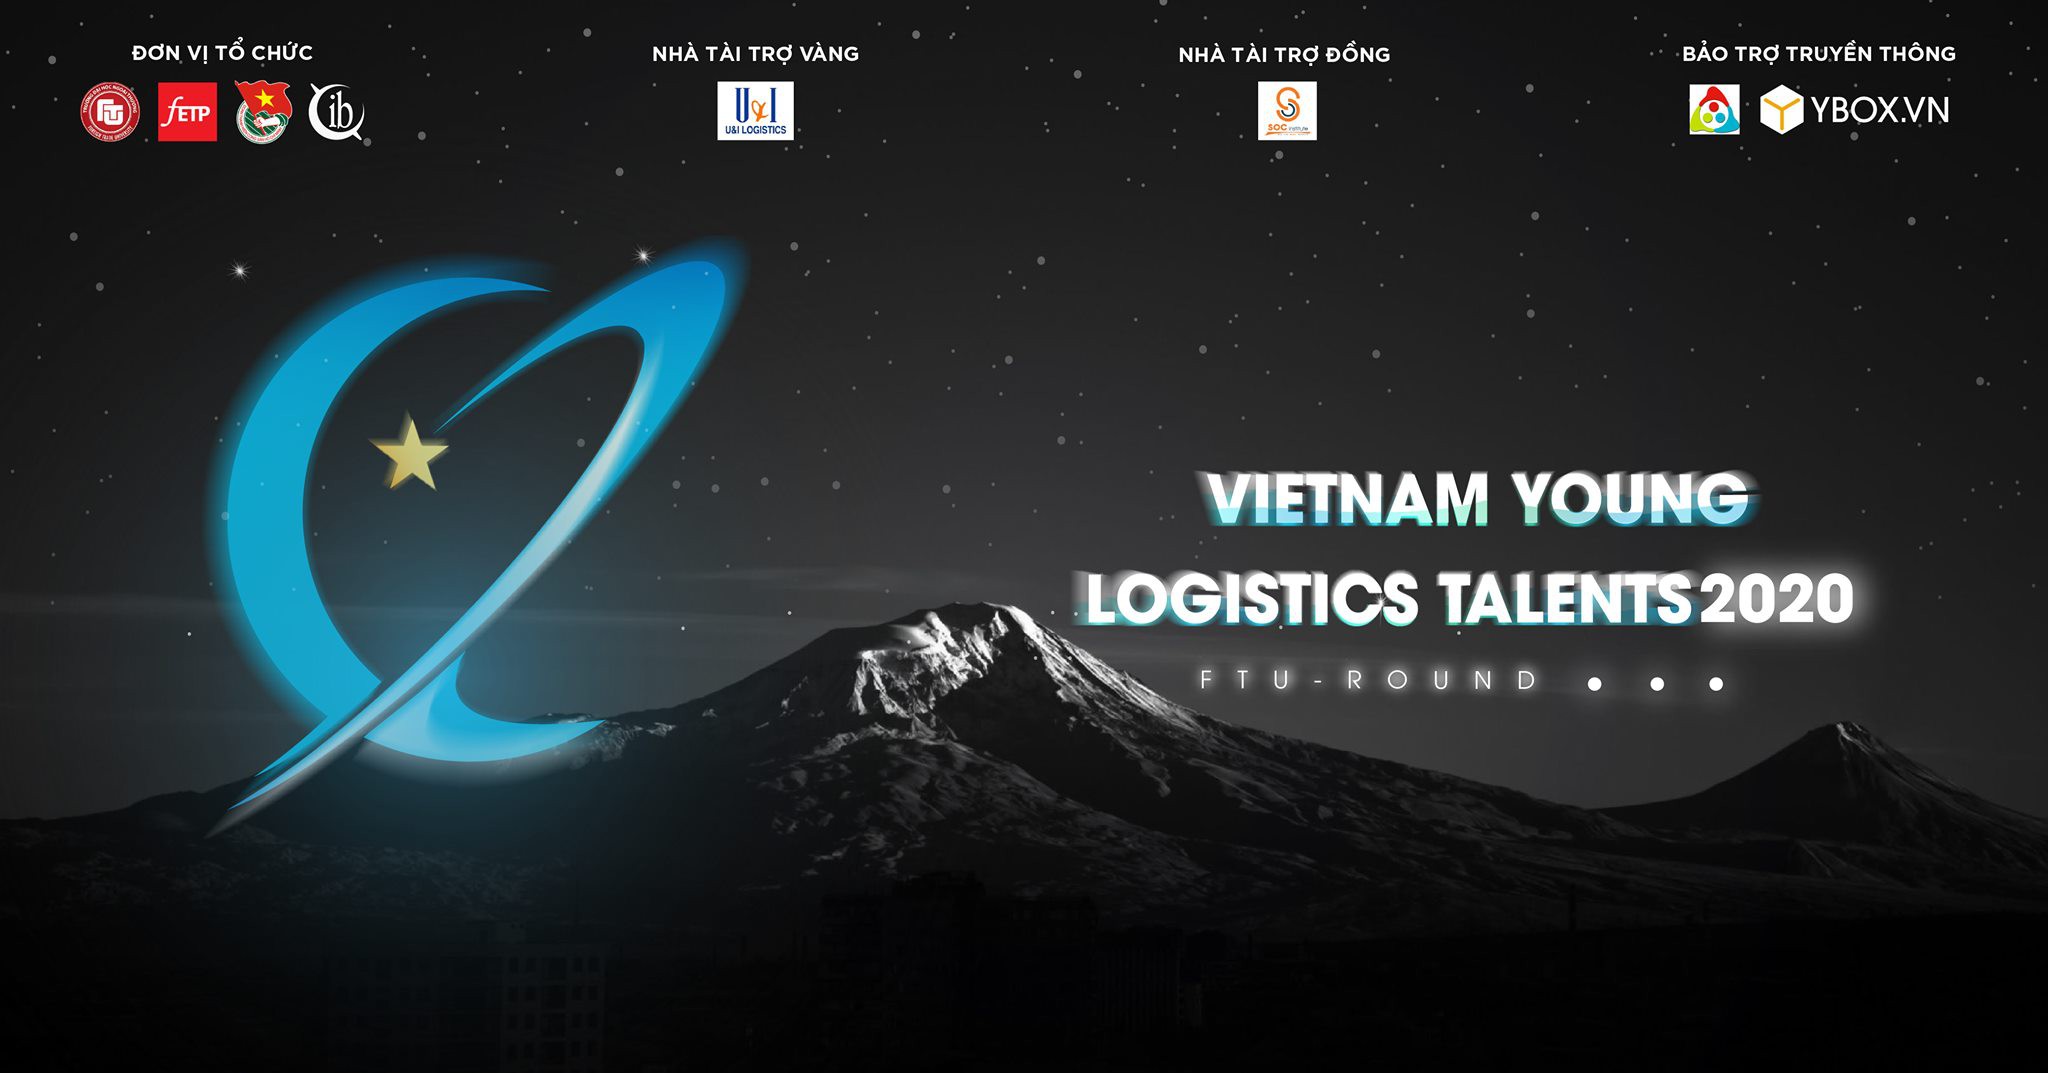 Đêm chung kết cuộc thi VIETNAM YOUNG LOGISTICS TALENTS 2020 - FTU Final Round